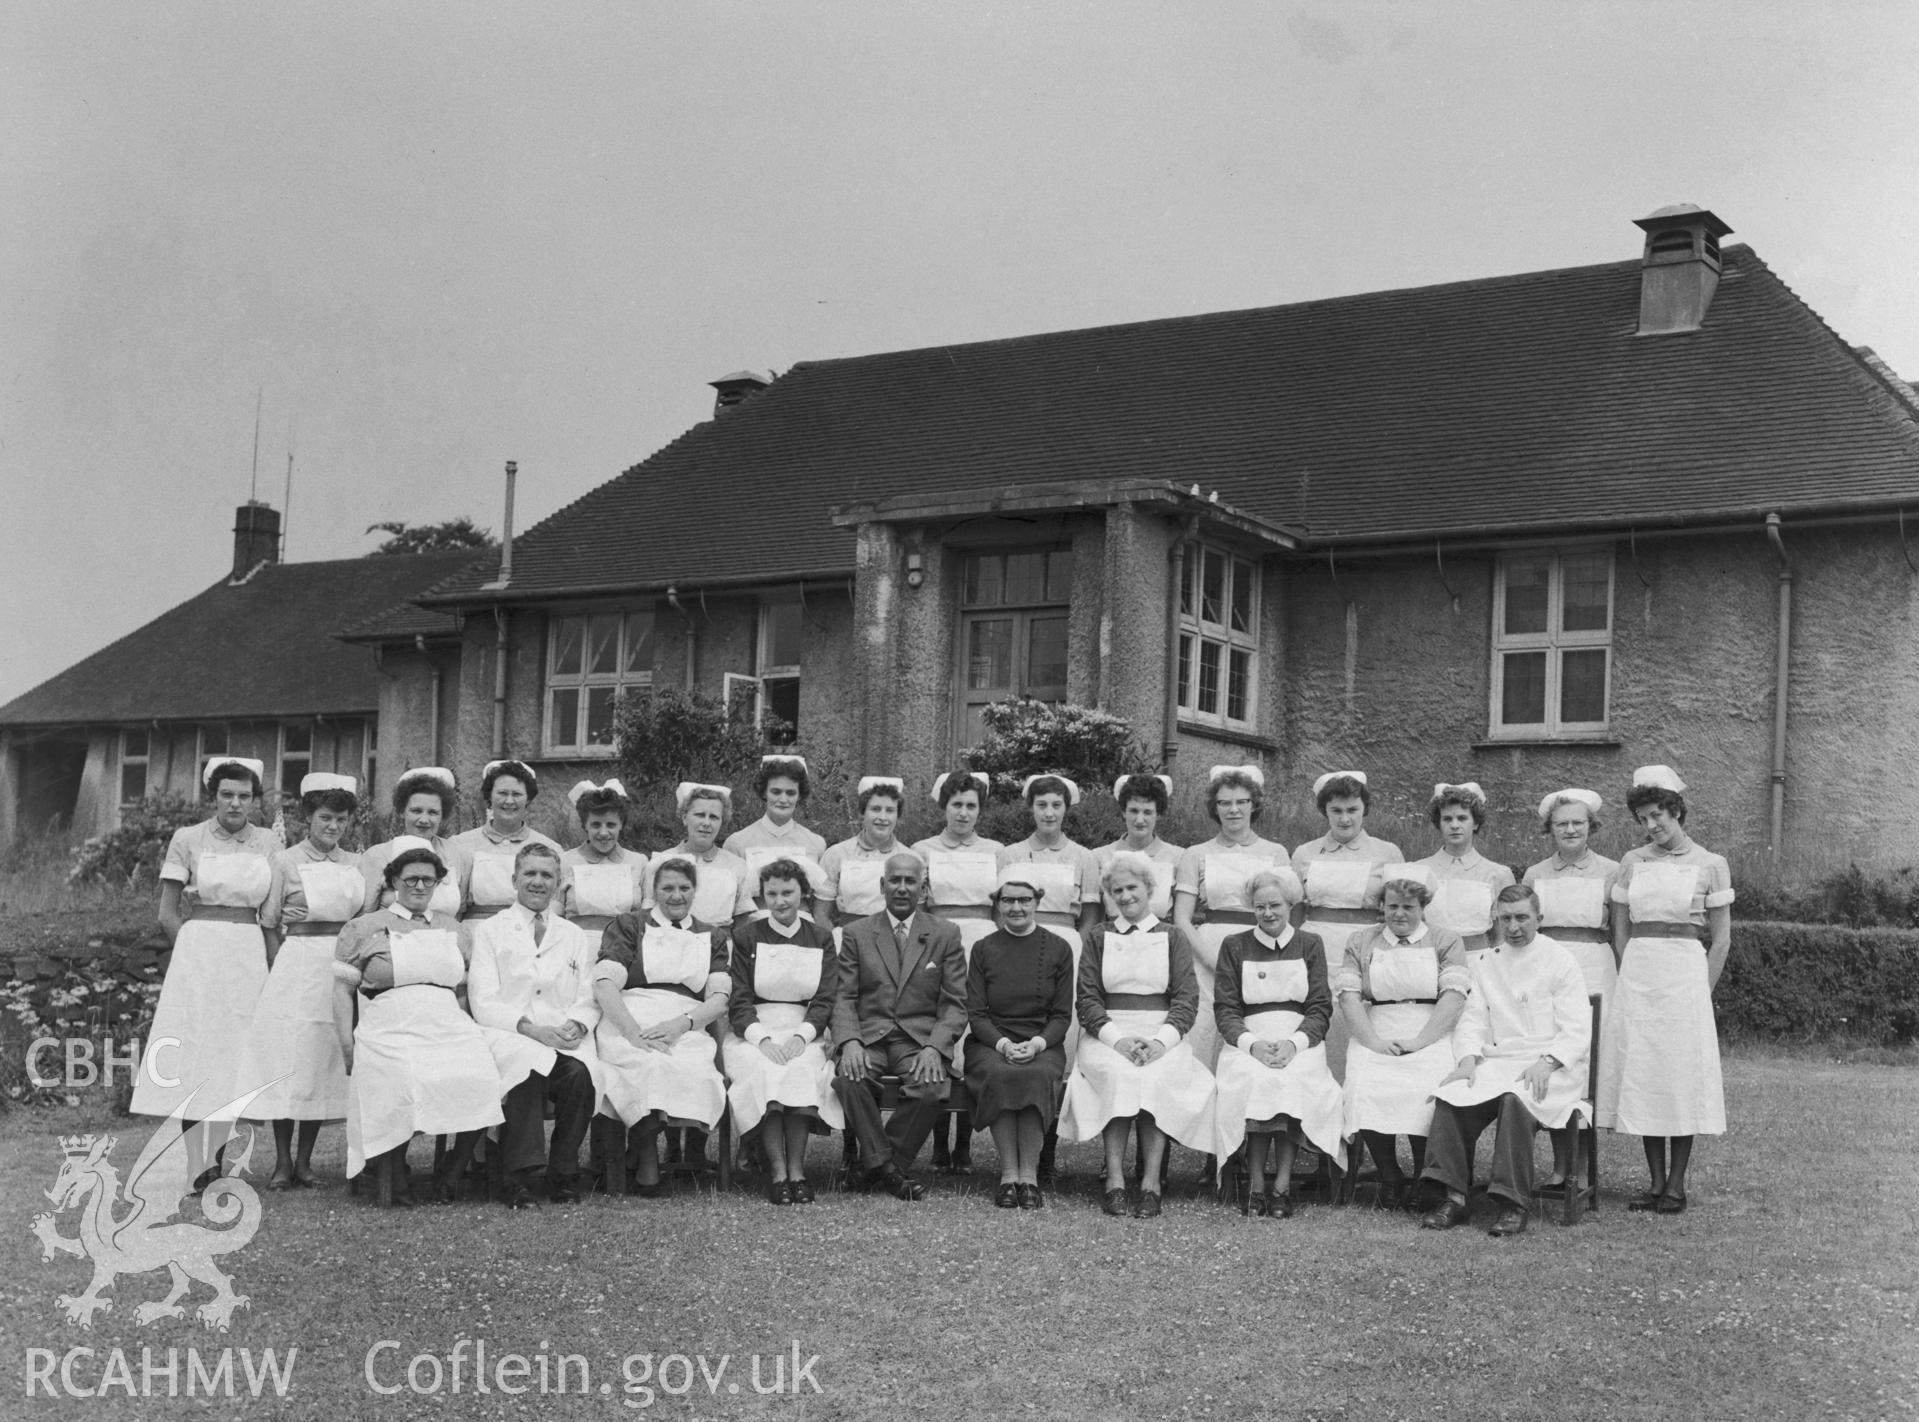 Black and white photograph showing nursing staff outside Abertillery Hospital. Staff are identified as (rear) N. Rogers, N. Collins, N. Purnell, N. Hinder, N. Nash, N. Jenkins, N.R. Jones, N. Janes, N. Haycock, N.H. Jones, N. Bowditch, N.Judge, N. Price, N. Szabo, N. Priddy, N. Perry (front) S.N. Meredith, Mr Aubrey, S. Morgan, S. Prosser, Mr R.W. Scanlon, Matron G.E. Body, S. Lewis, S. Poultney, S.N. Hopkins, and Mr Cleaton.